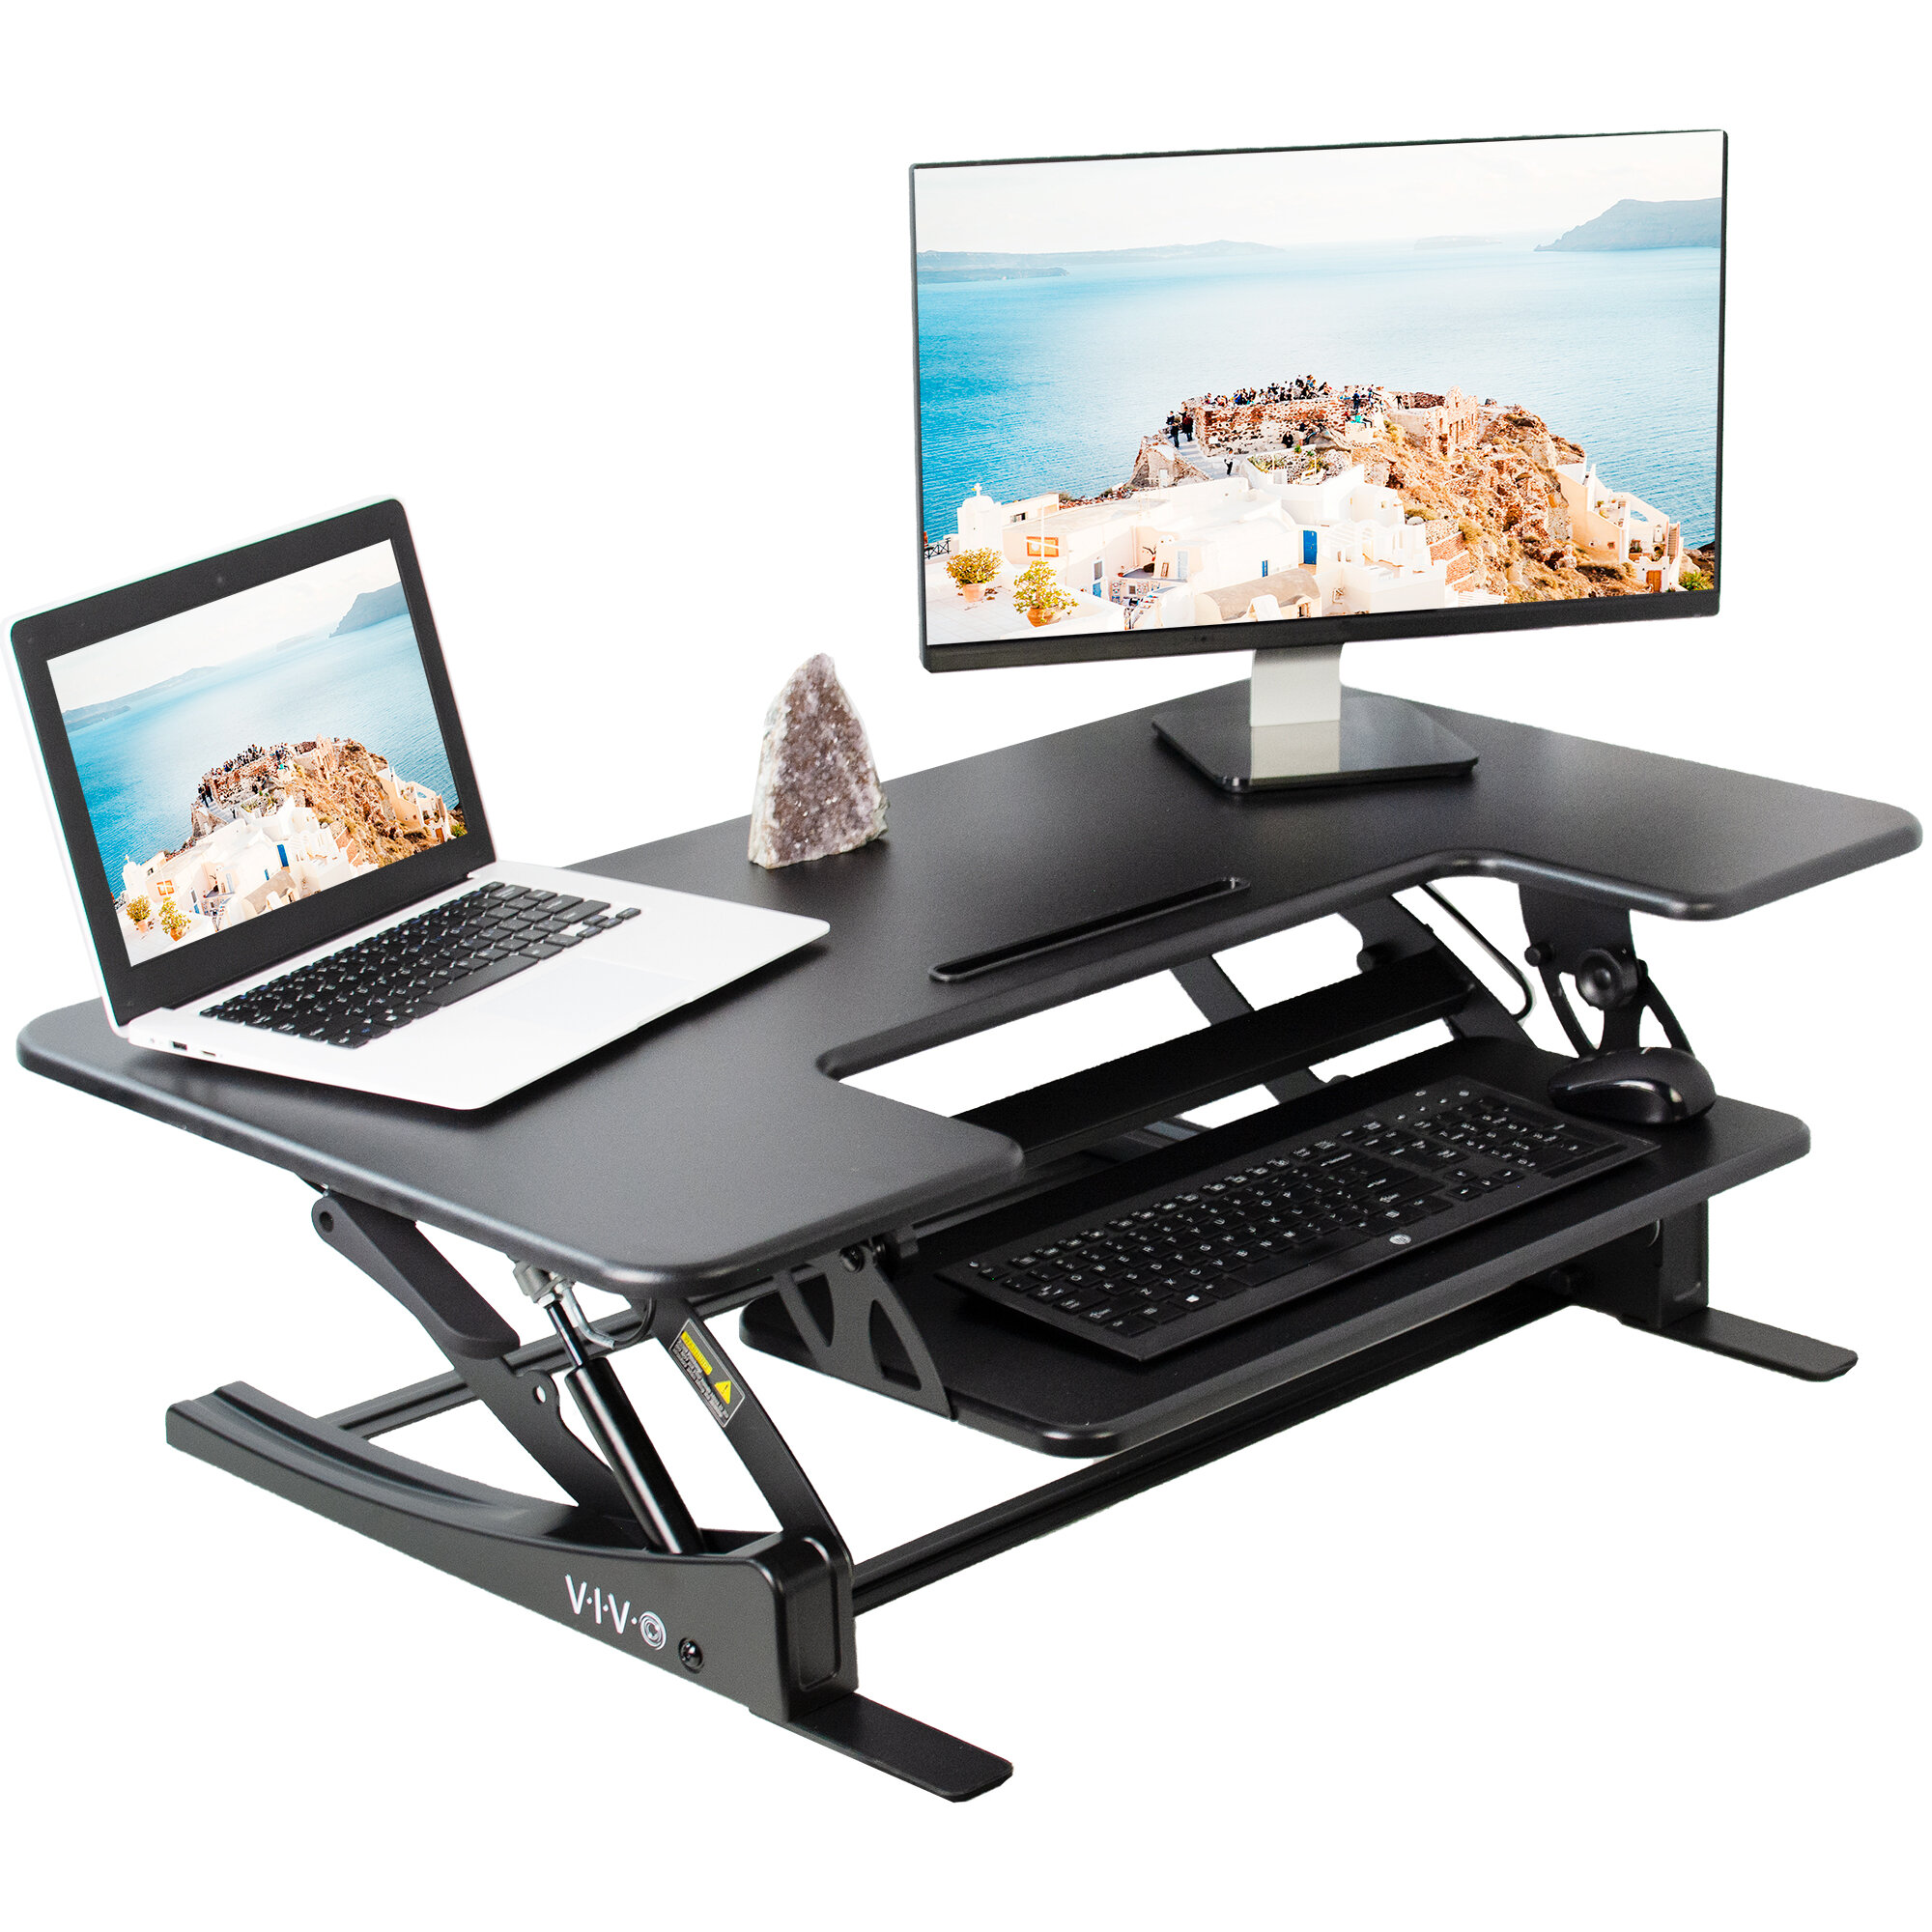 Vivo Height Adjustable Standing Desk Converter Wayfair